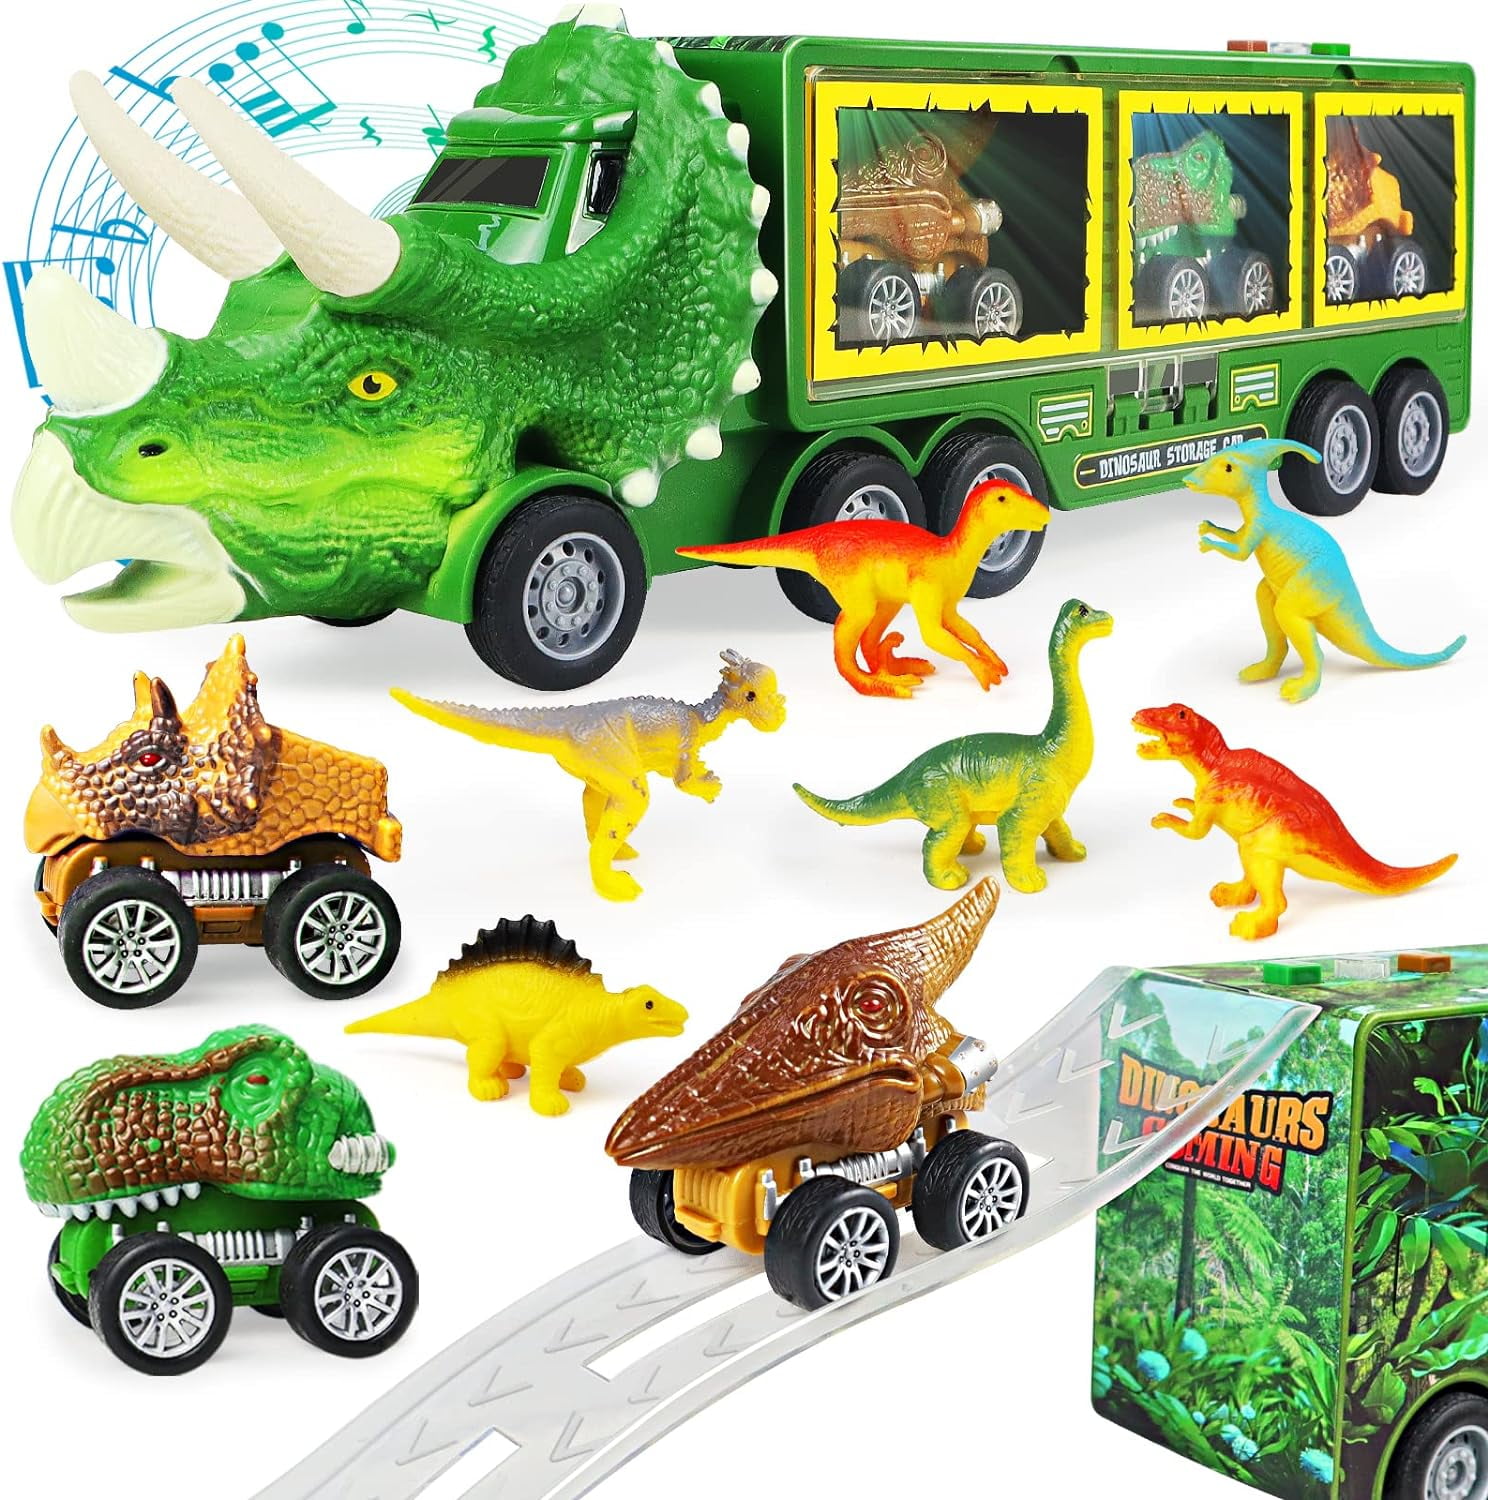 Playkidz Motorized Ambulance Toy Truck for Kids with Light & Siren